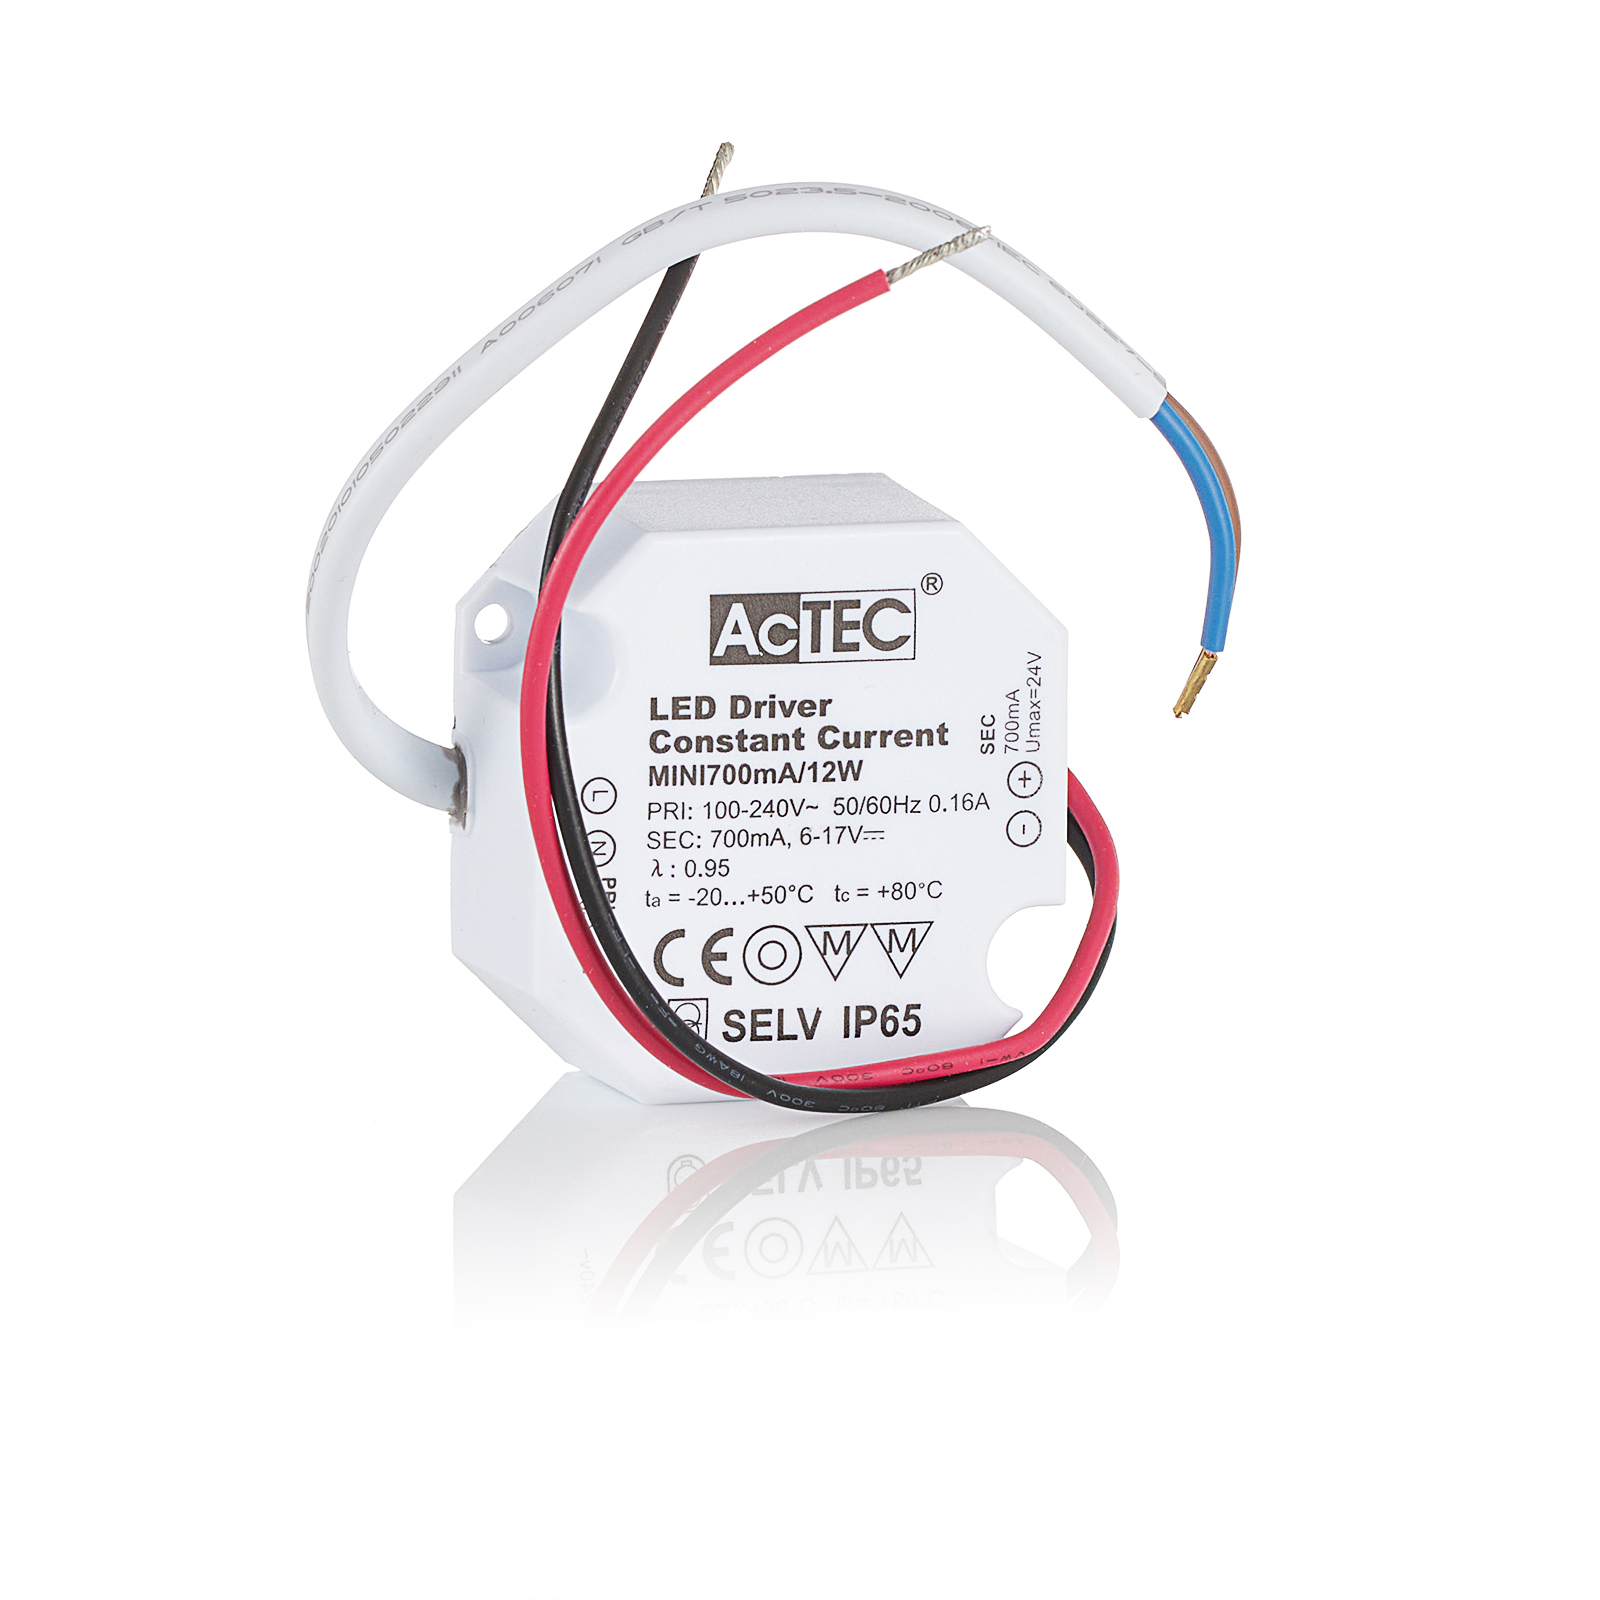 AcTEC Mini LED driver CC 700mA, 12W, IP65